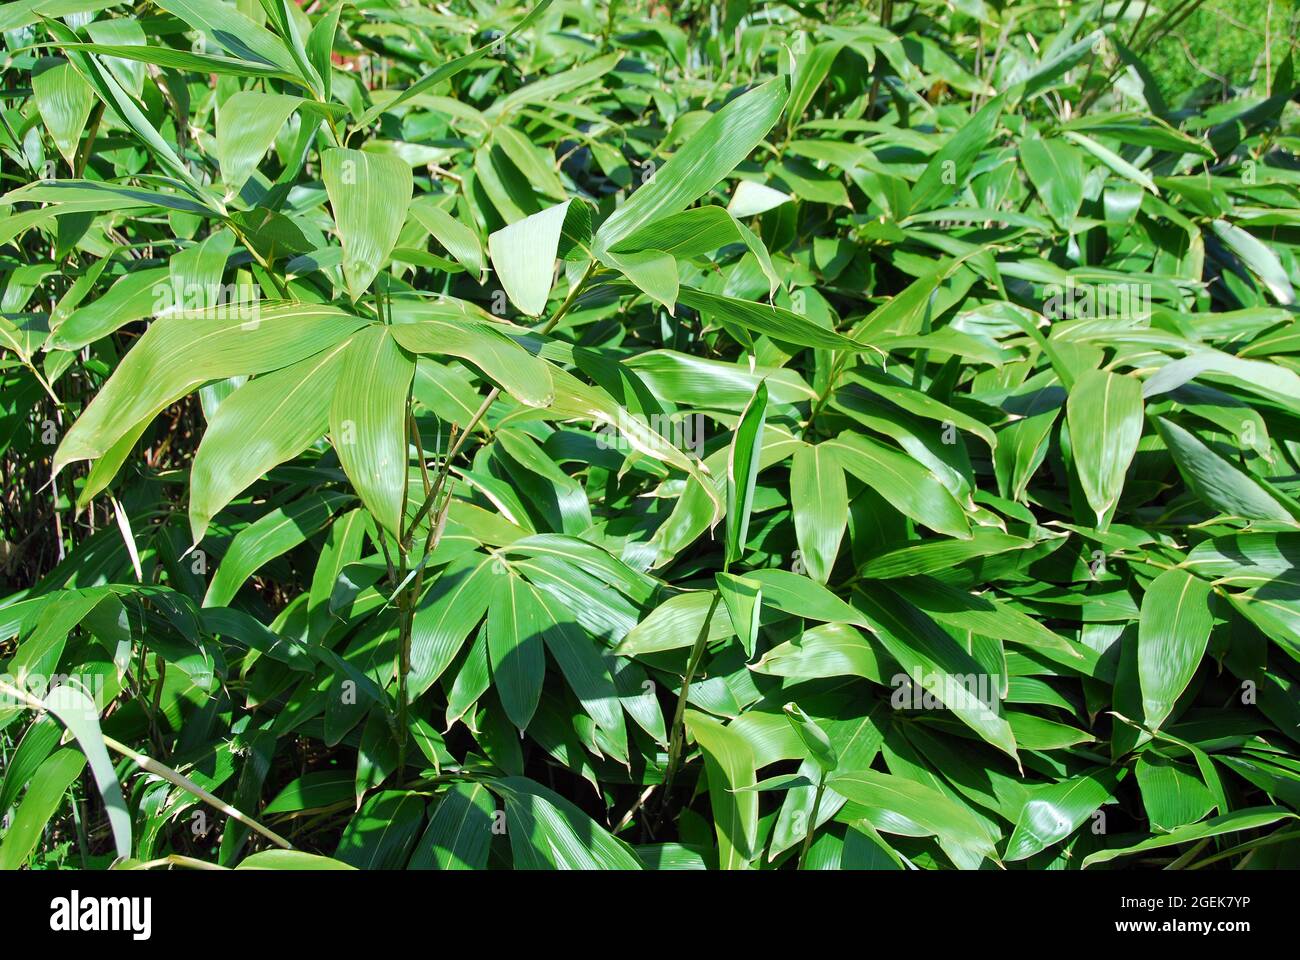 broadleaf bamboo or broad-leaved bamboo, Sasa palmata, legyező törpebambusz Stock Photo